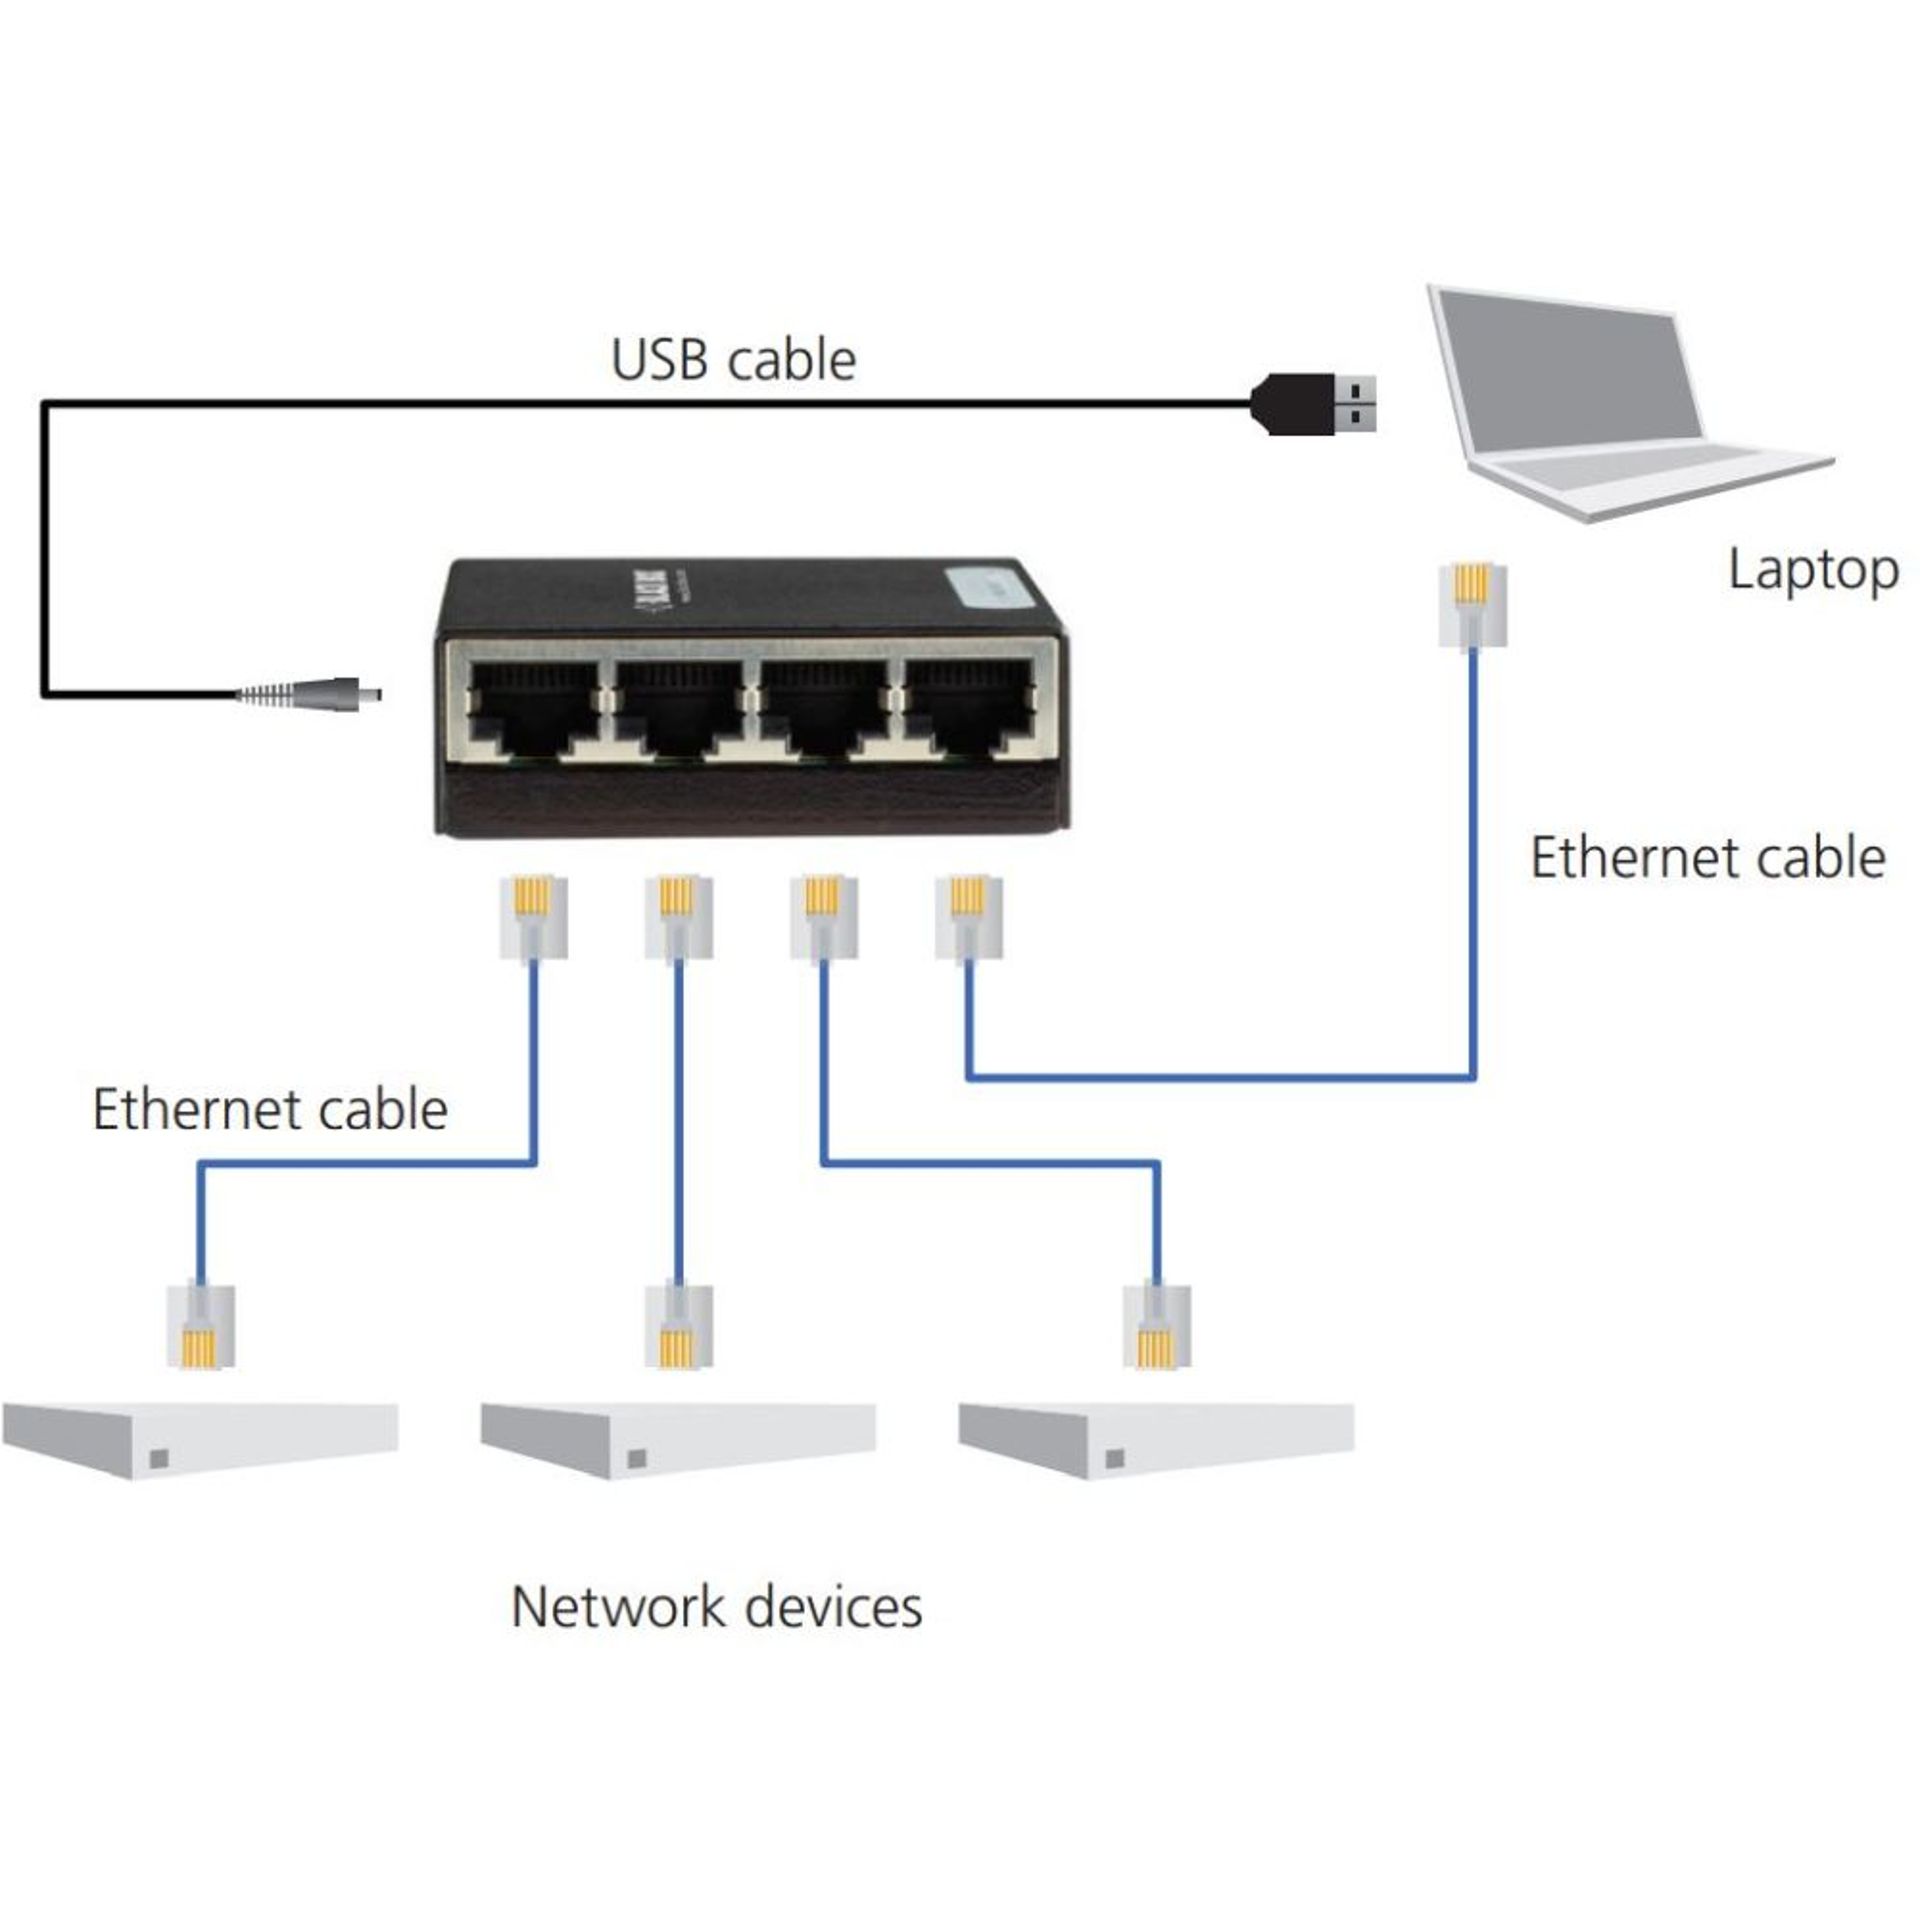 LGB304AE, Gigabit Ethernet Switch with EU Power Supply - 4-Port